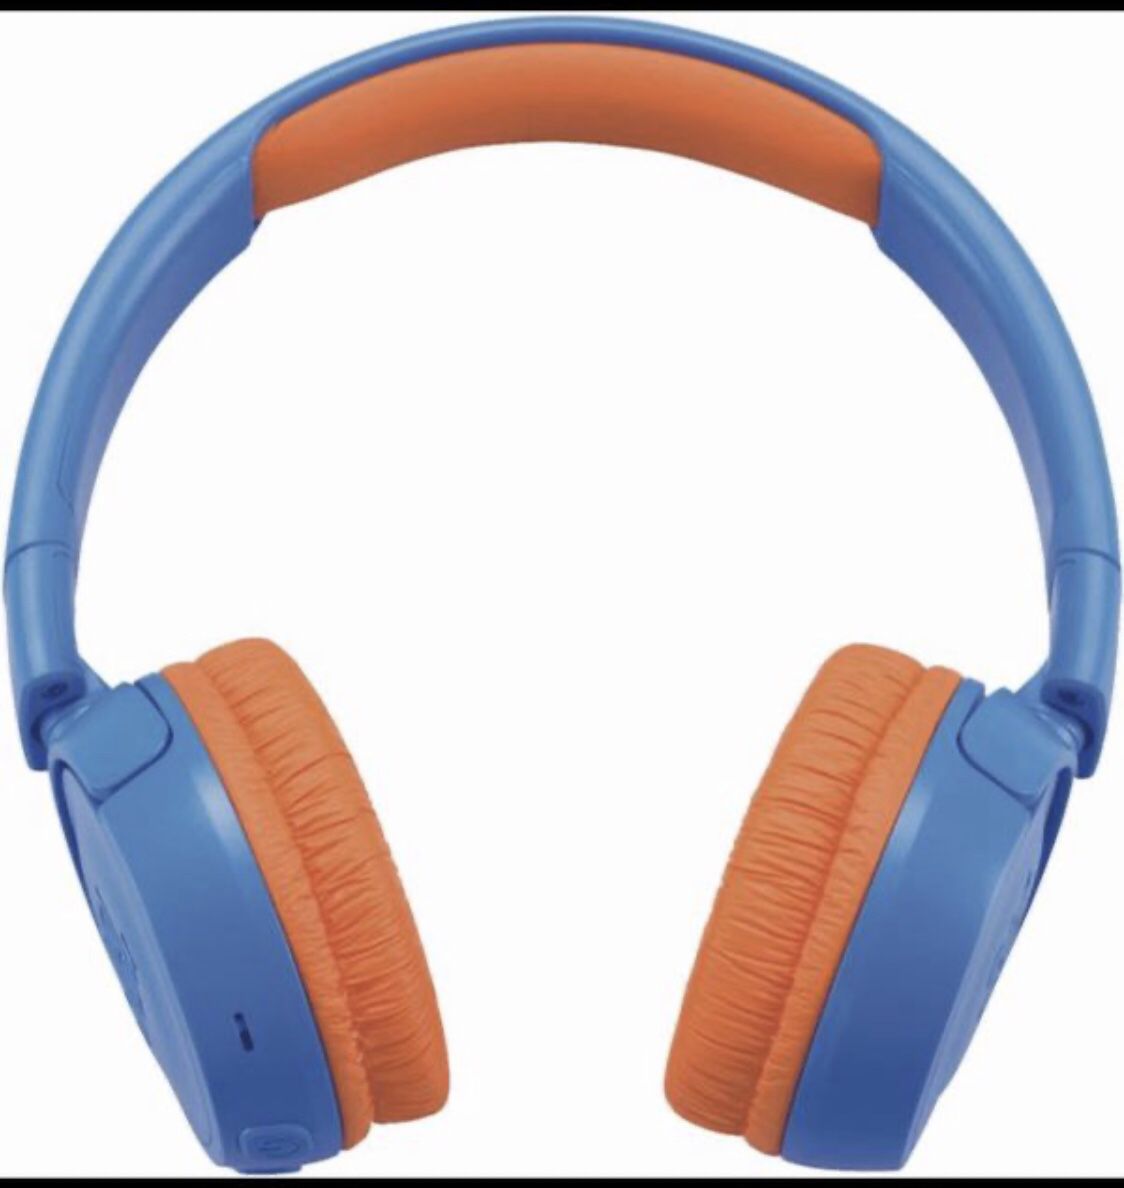 Kid’s wireless headphones 🎧